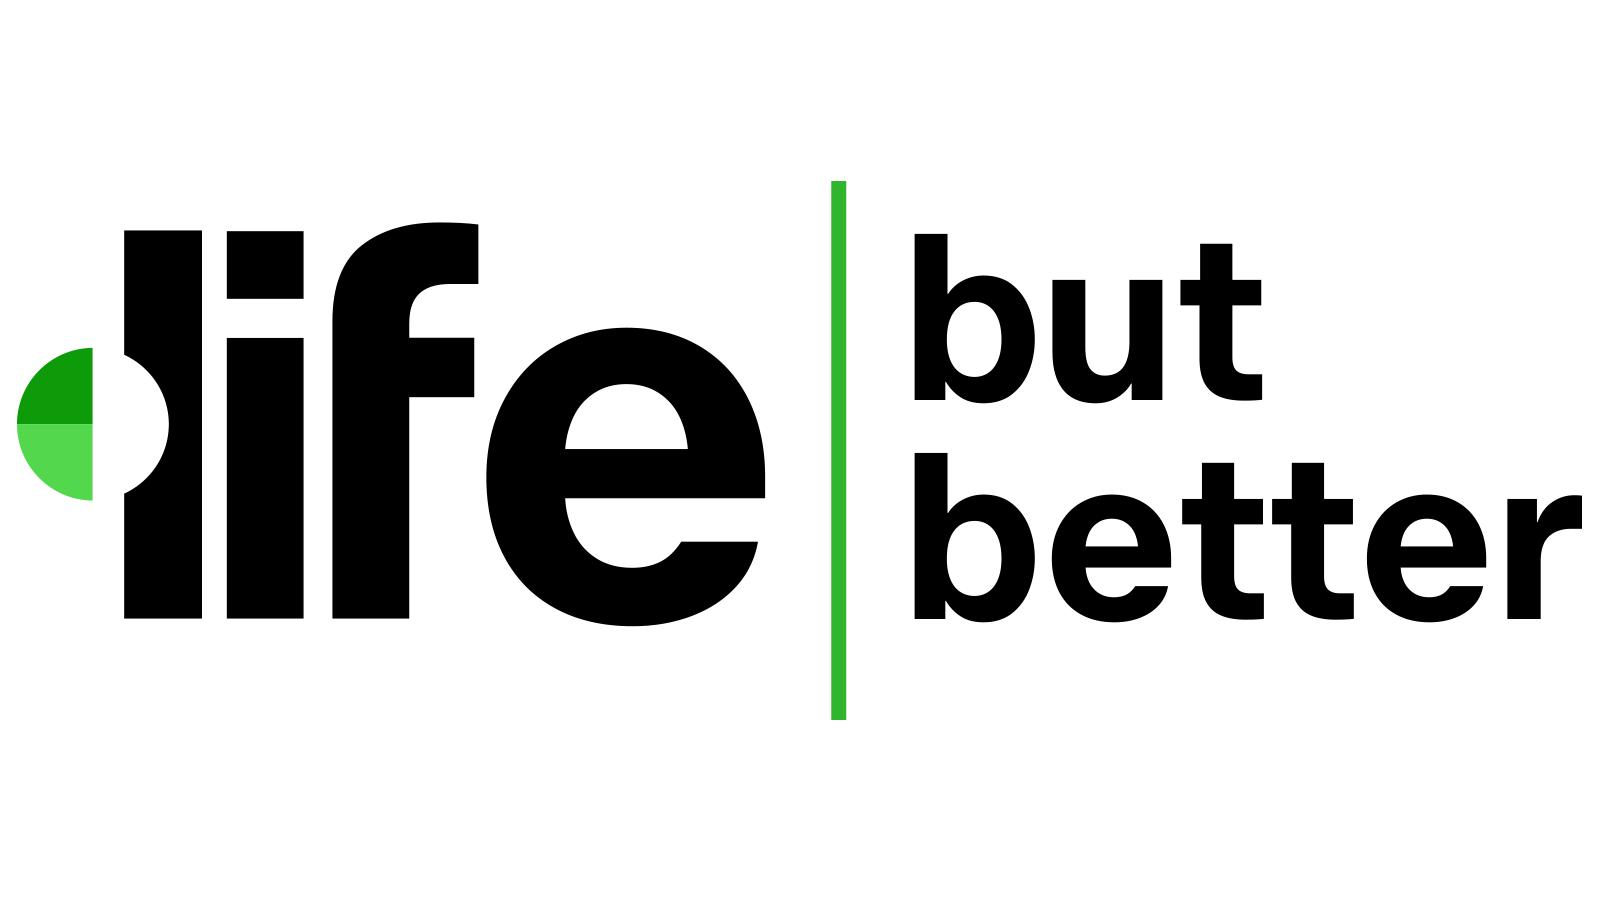 Life, But Better